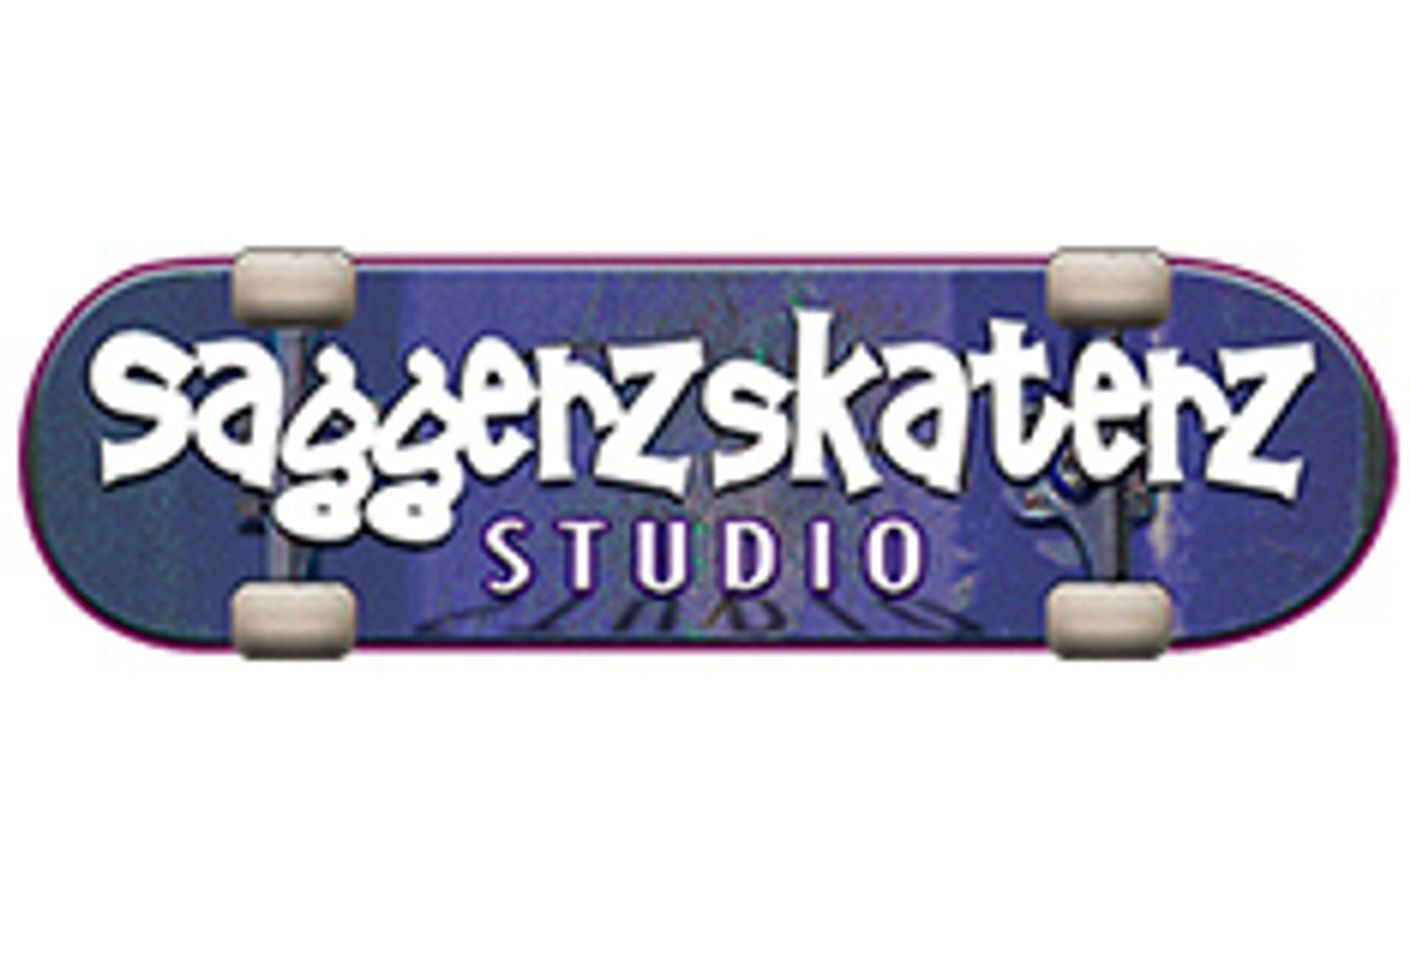 Saggerz Skaterz Studio Names Andrew Yancey VP